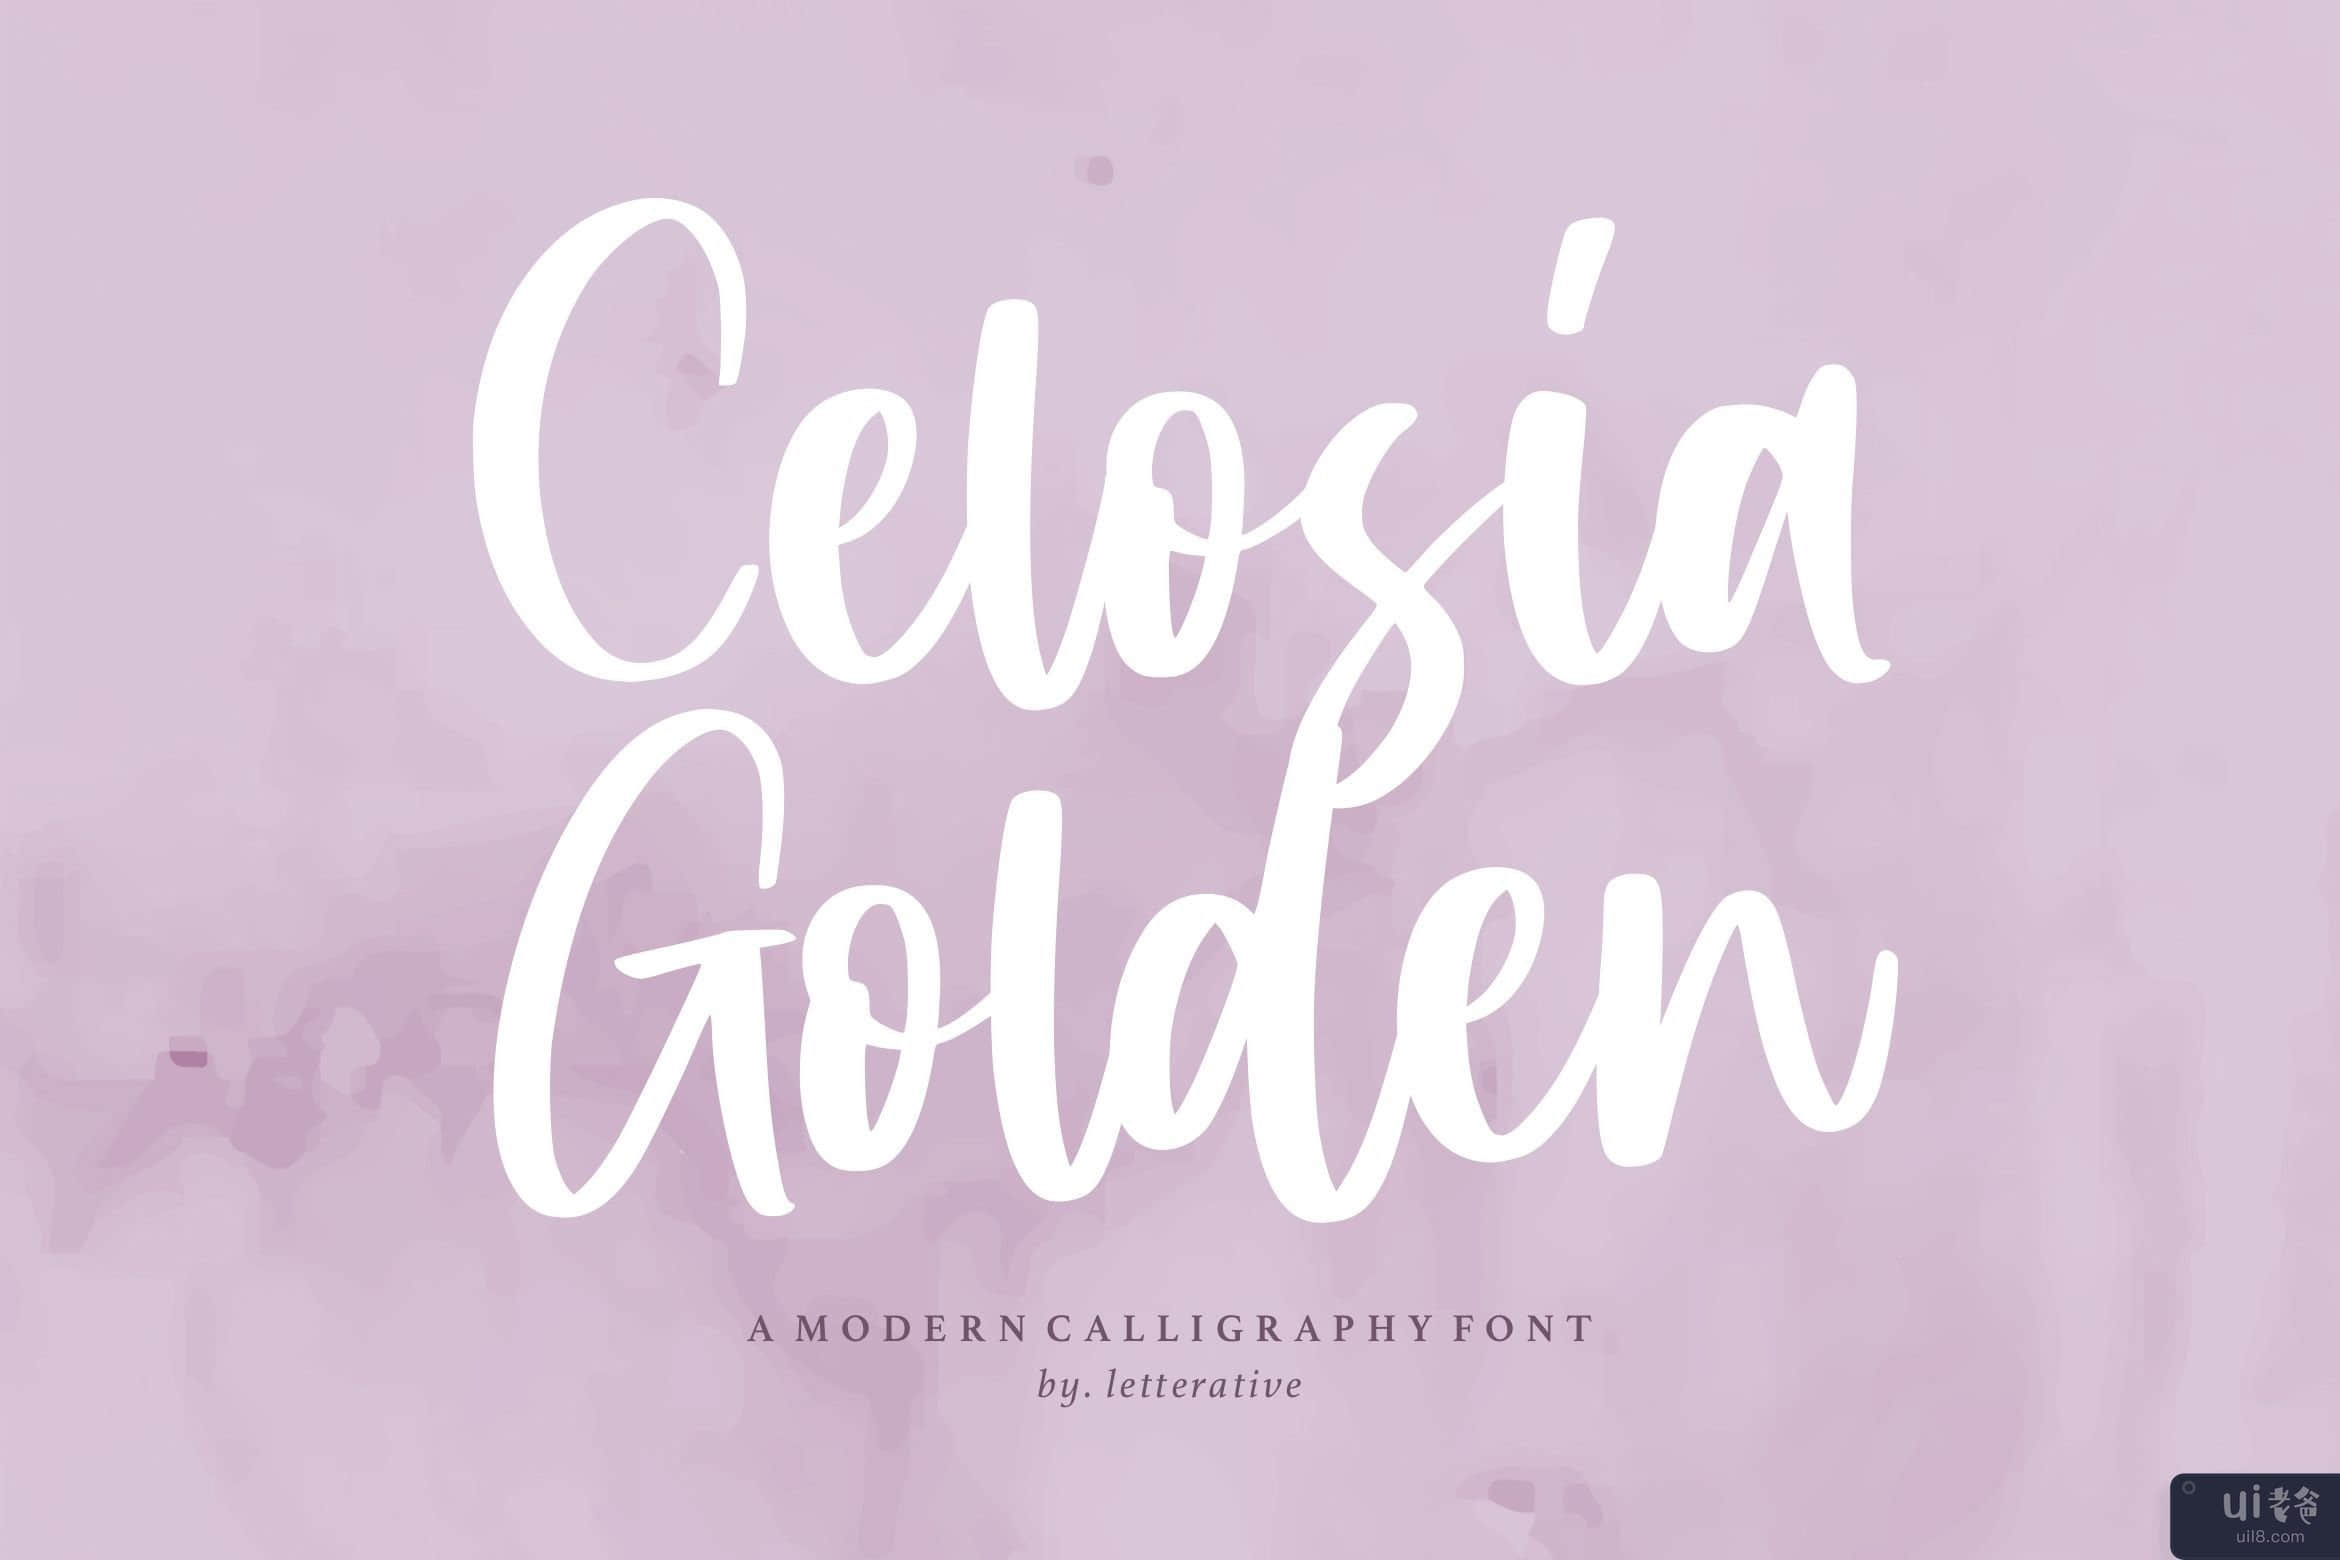 Celosia Golden 是一种现代书法字体(Celosia Golden is a Modern Calligraphy Font)插图3